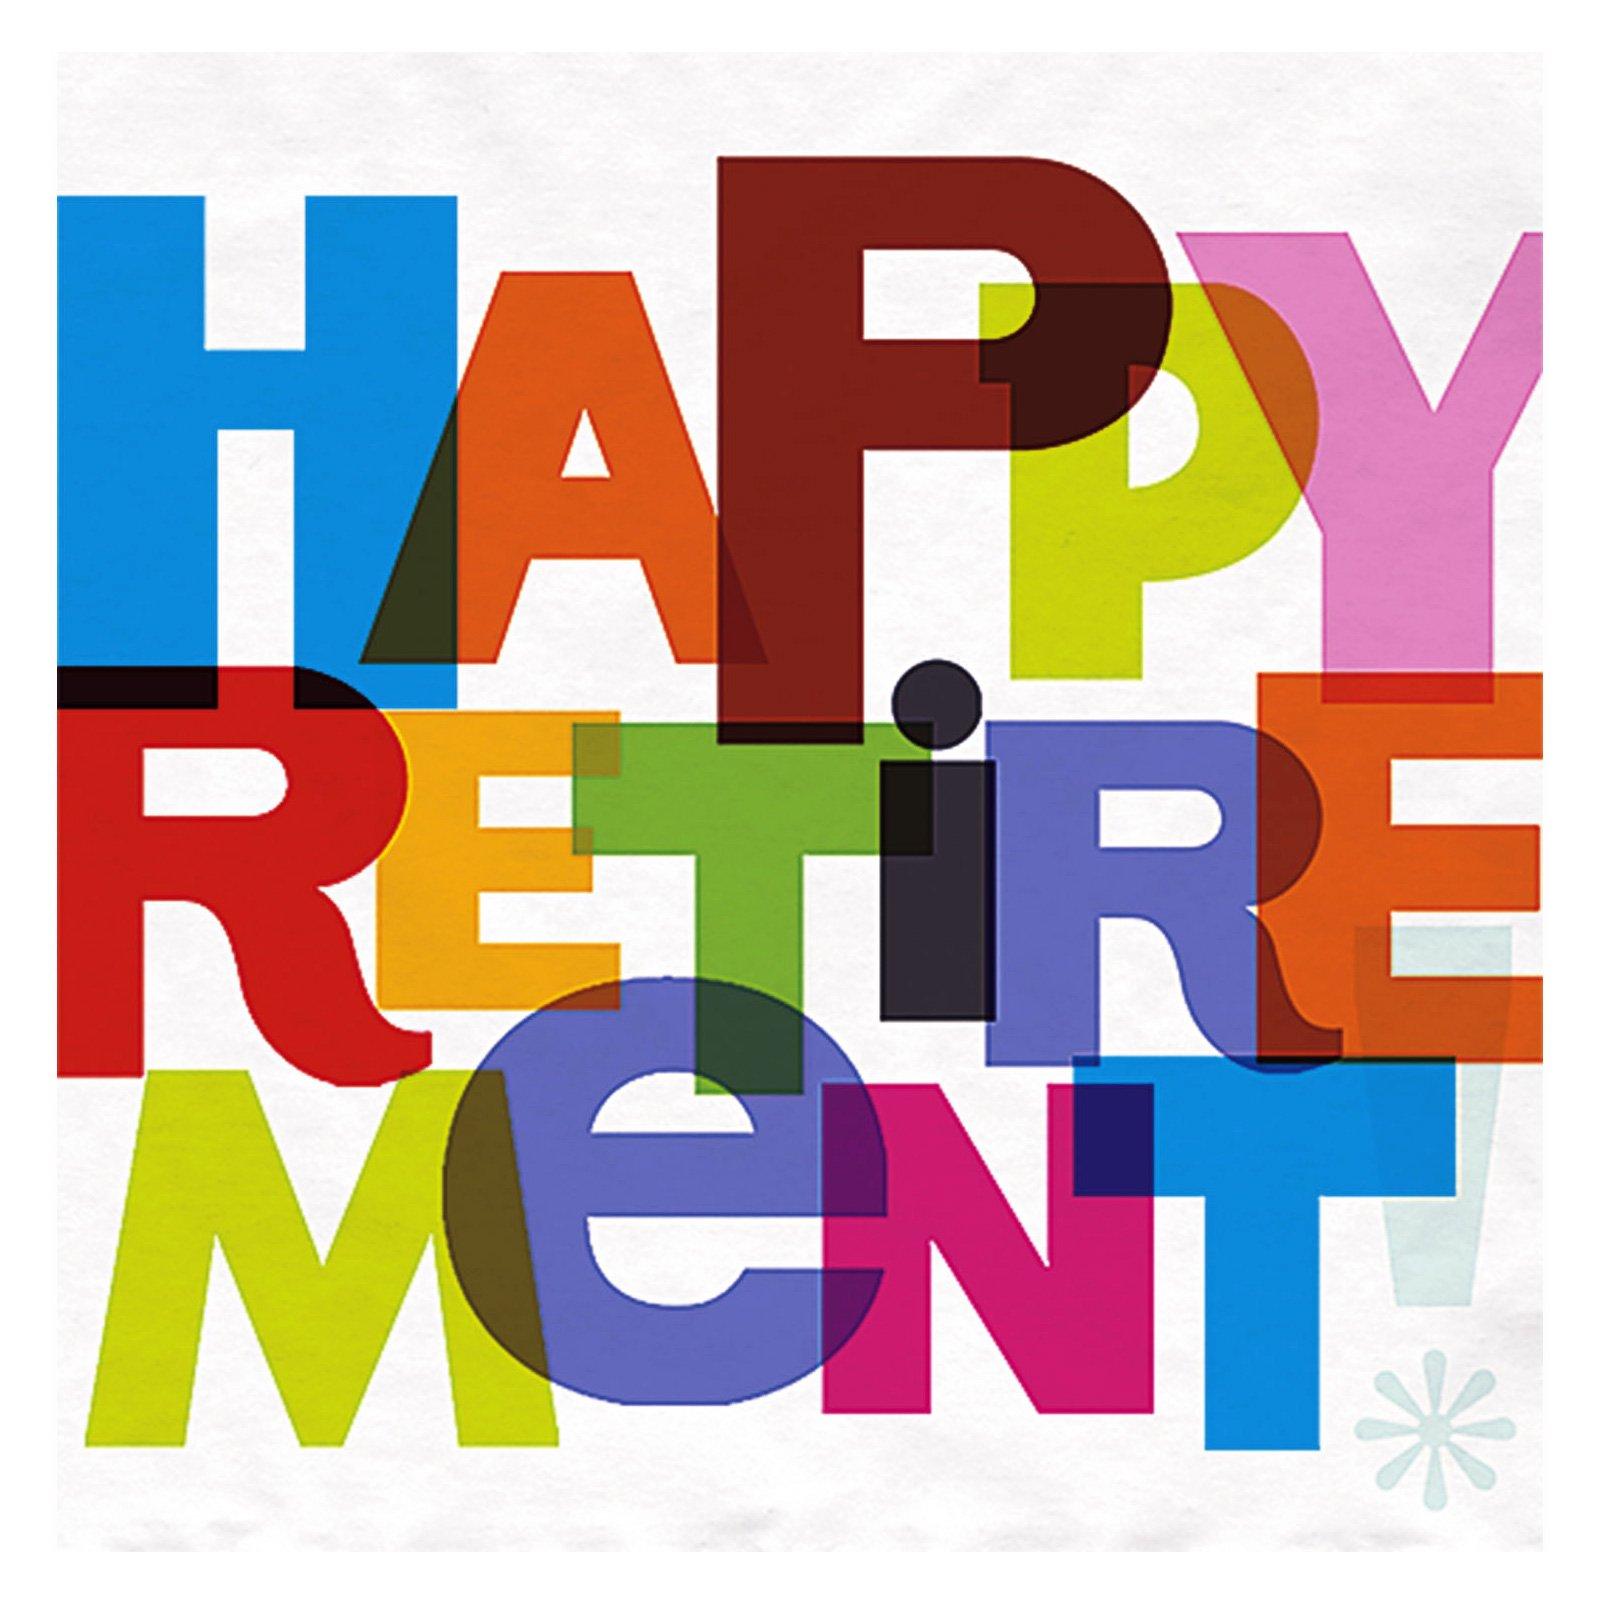 retirement clip art free download - photo #5